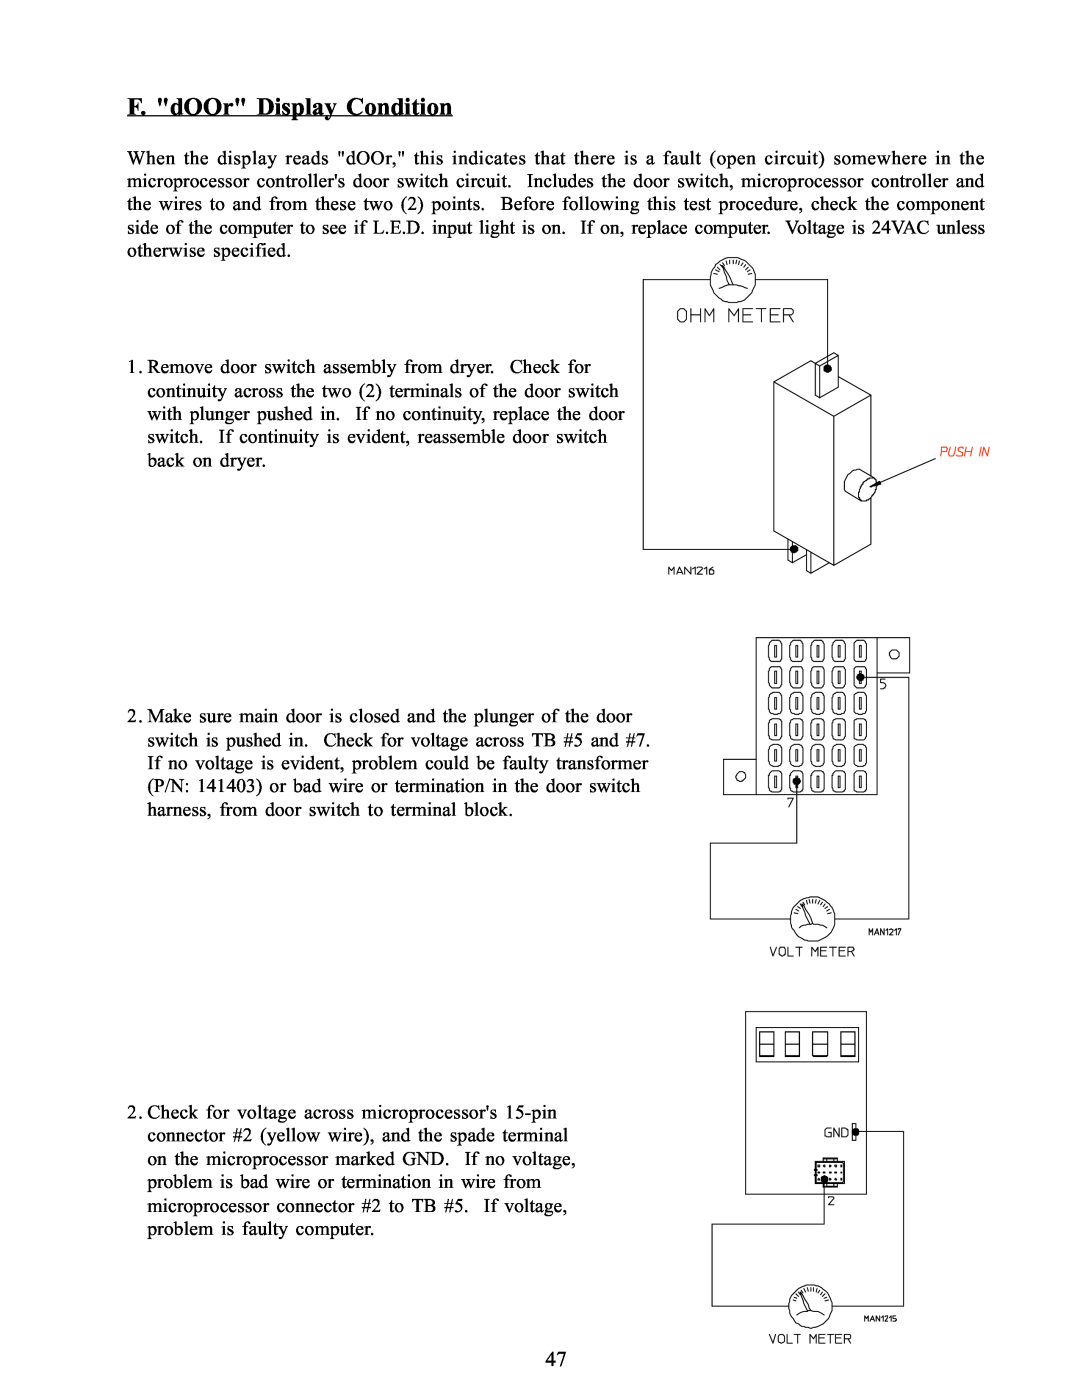 American Dryer Corp WDA-385 service manual F. dOOr Display Condition 